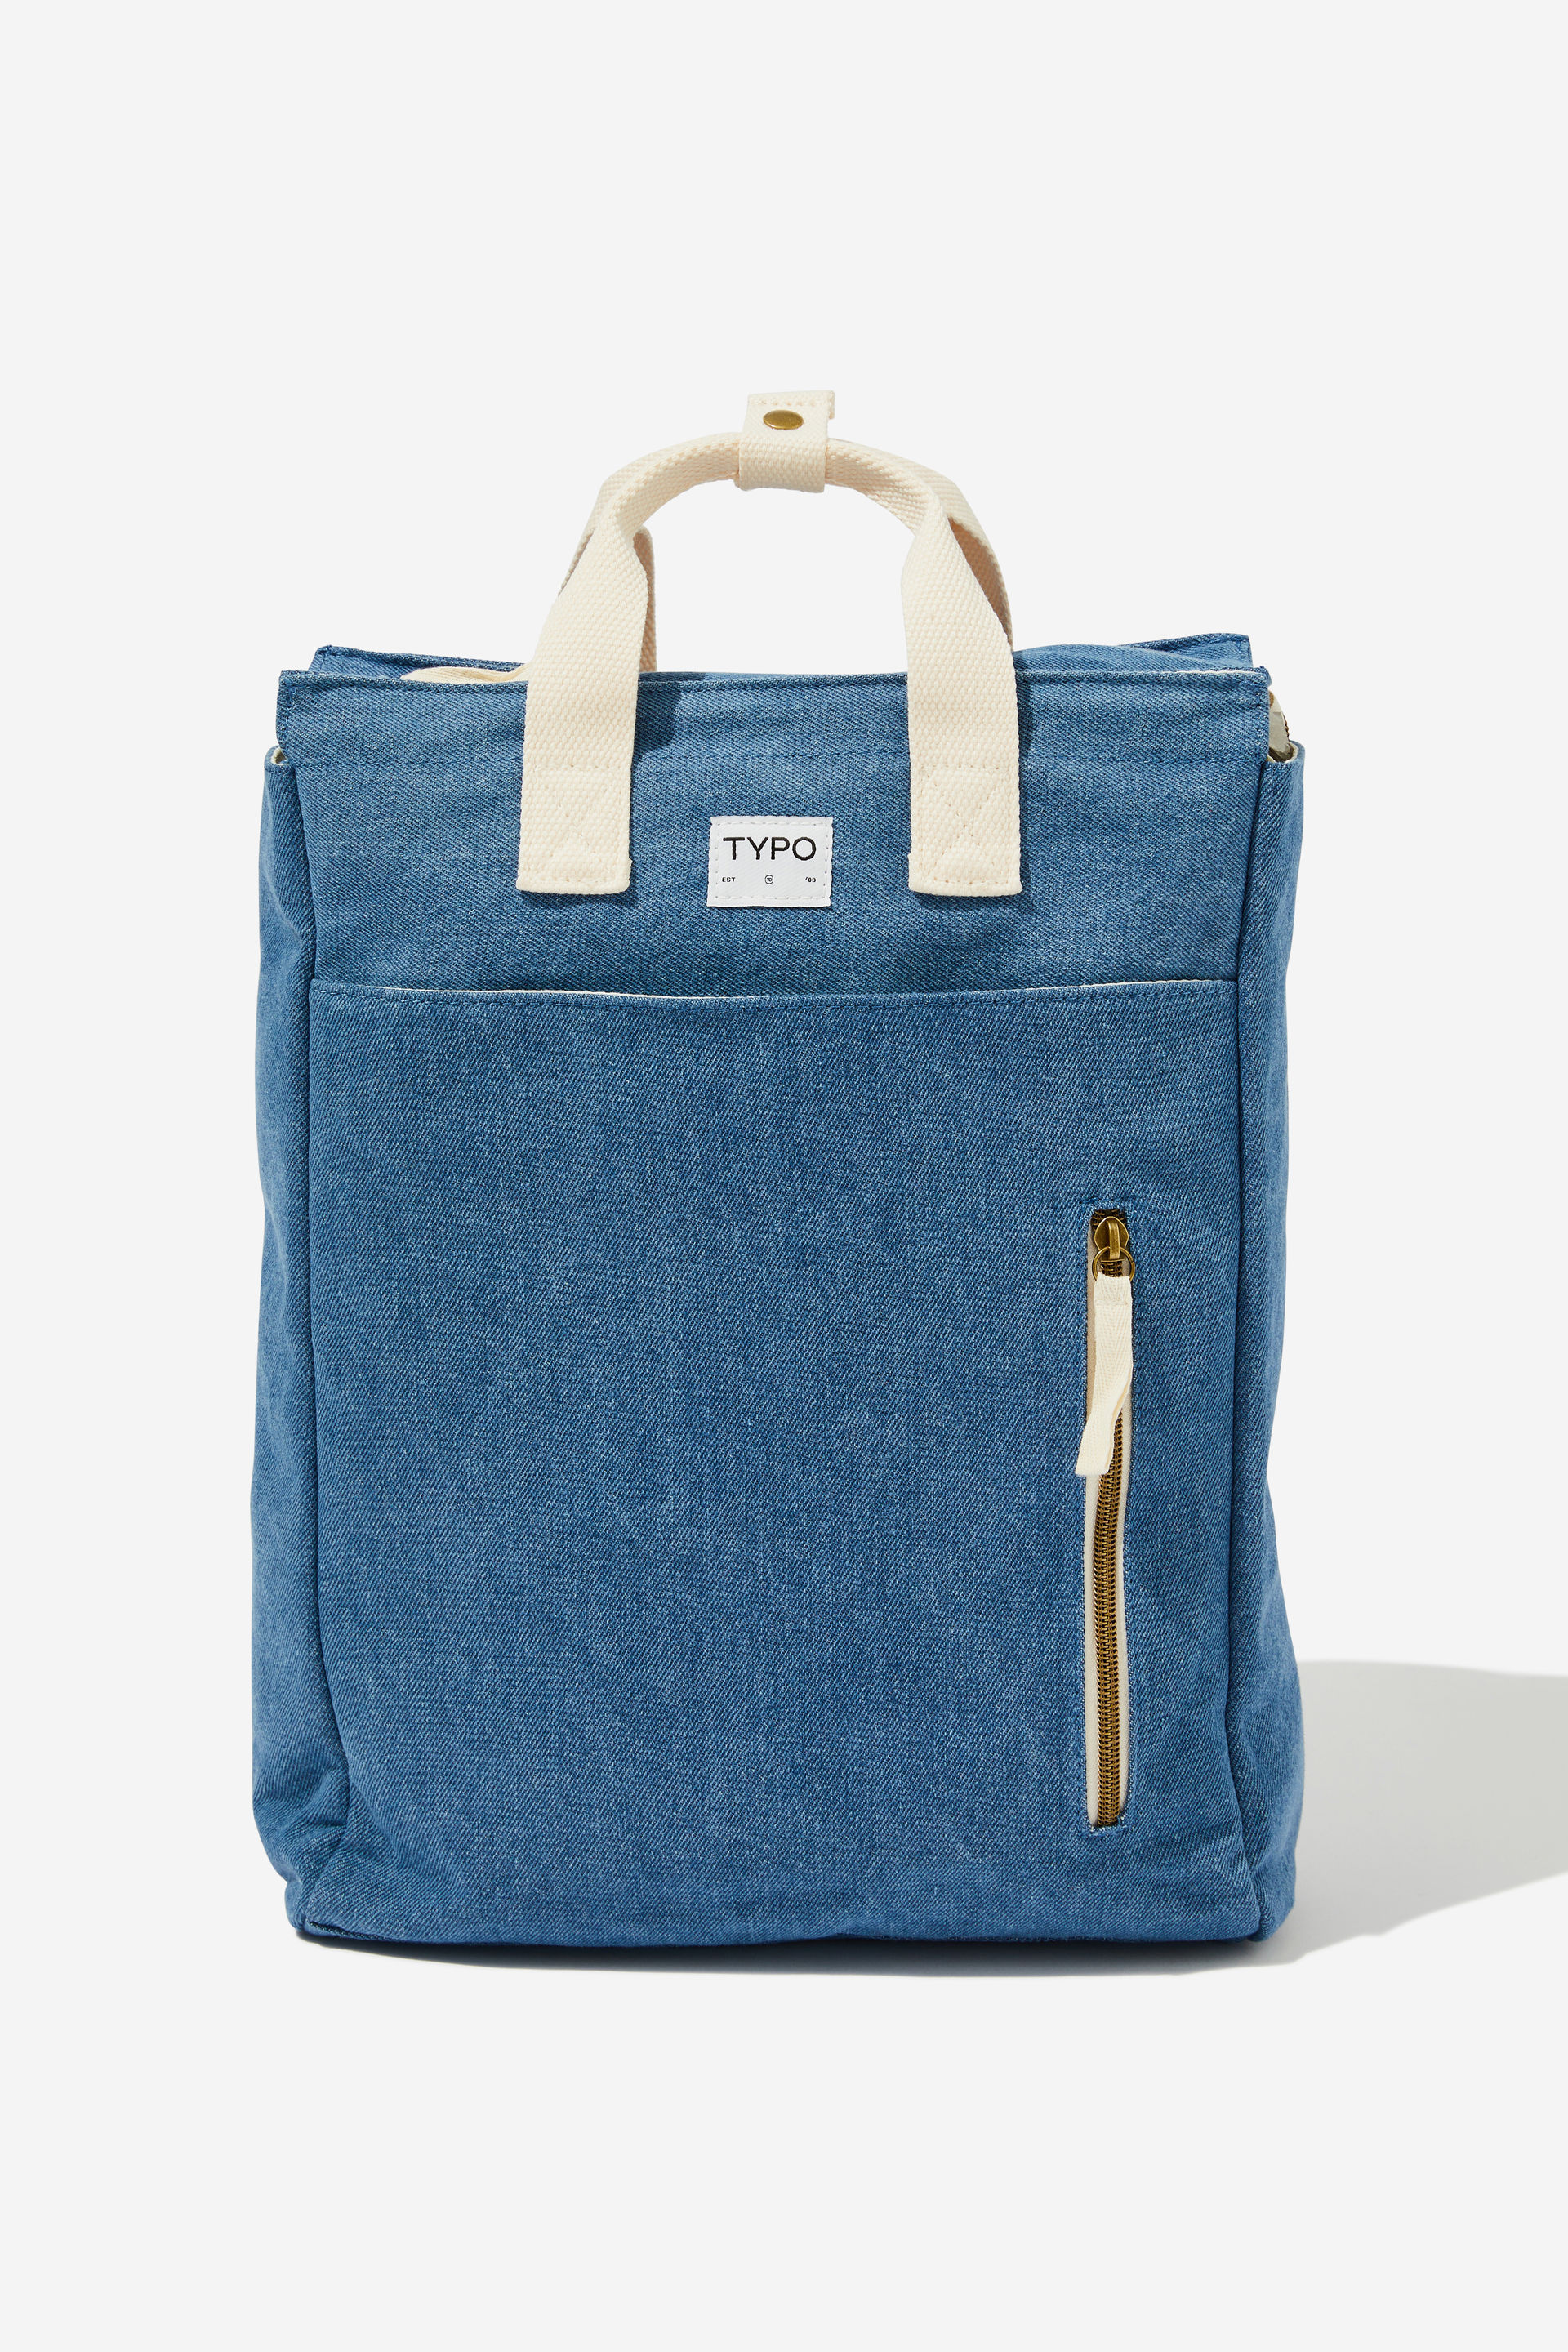 Typo - Got Your Back Tote Backpack - Blue denim